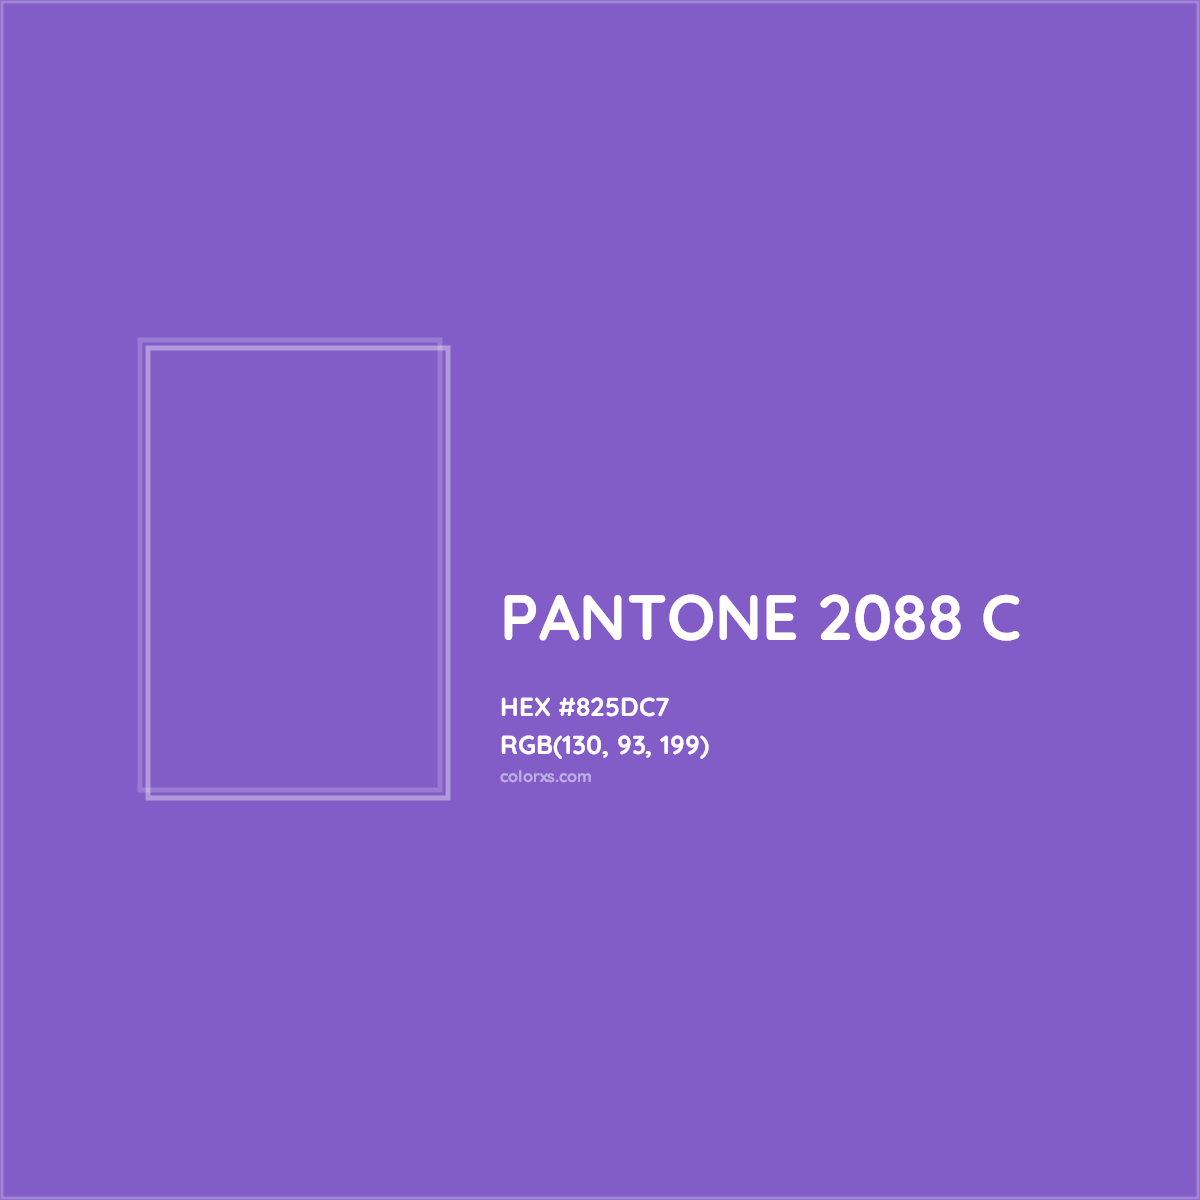 HEX #825DC7 PANTONE 2088 C CMS Pantone PMS - Color Code